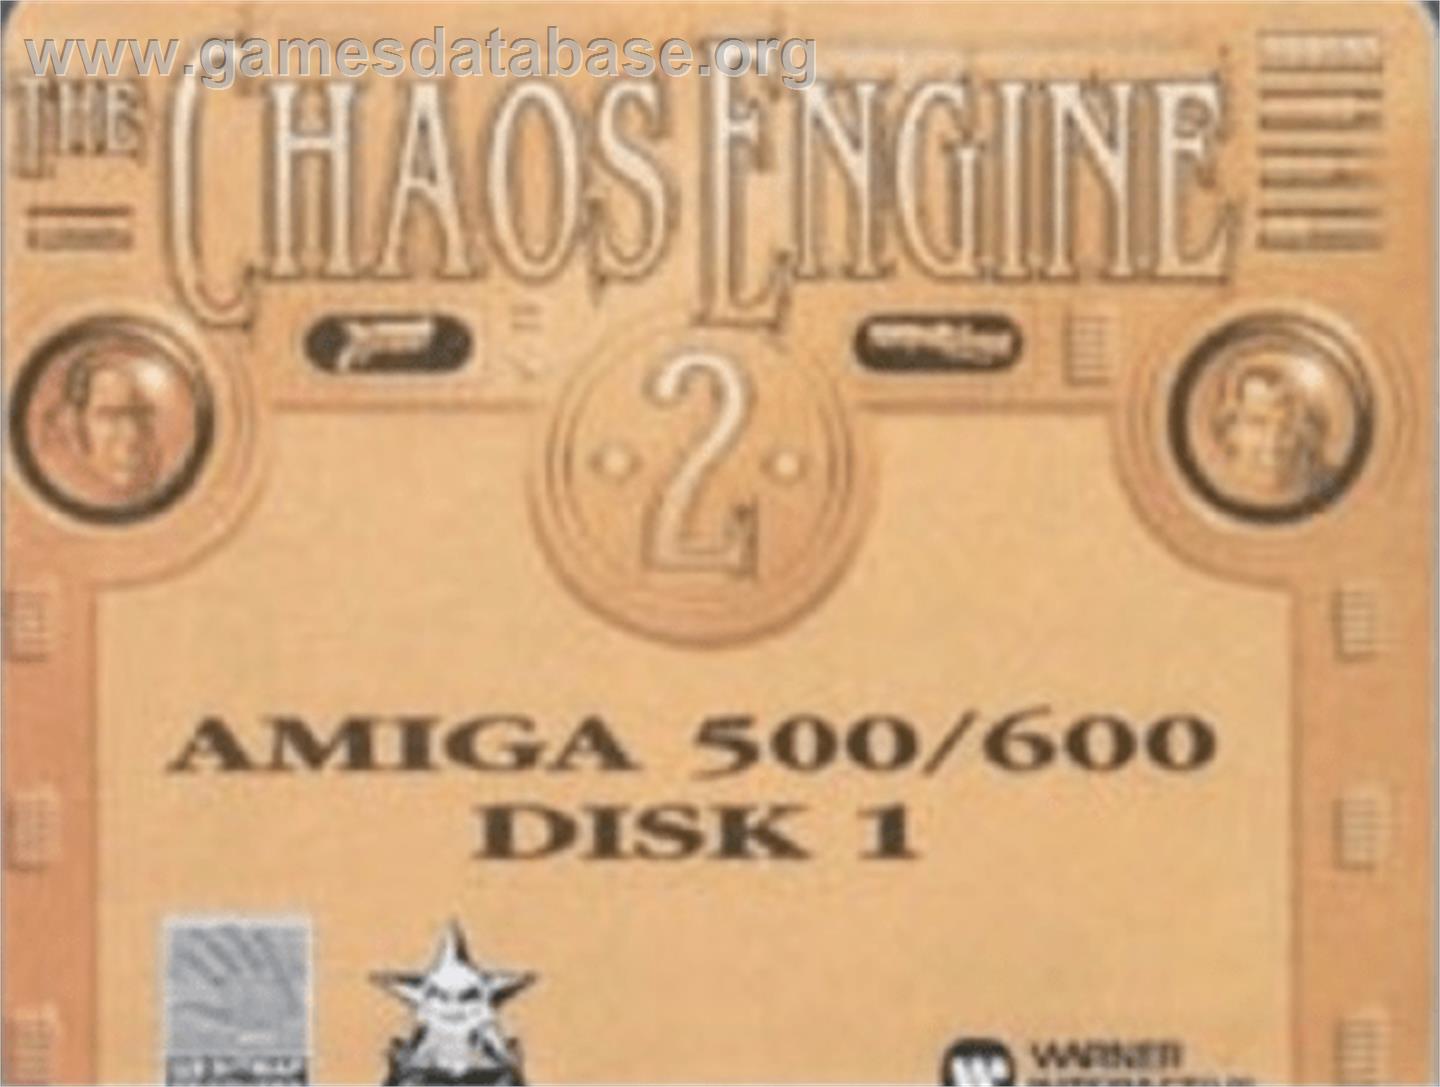 Chaos Engine 2 - Commodore Amiga - Artwork - Cartridge Top